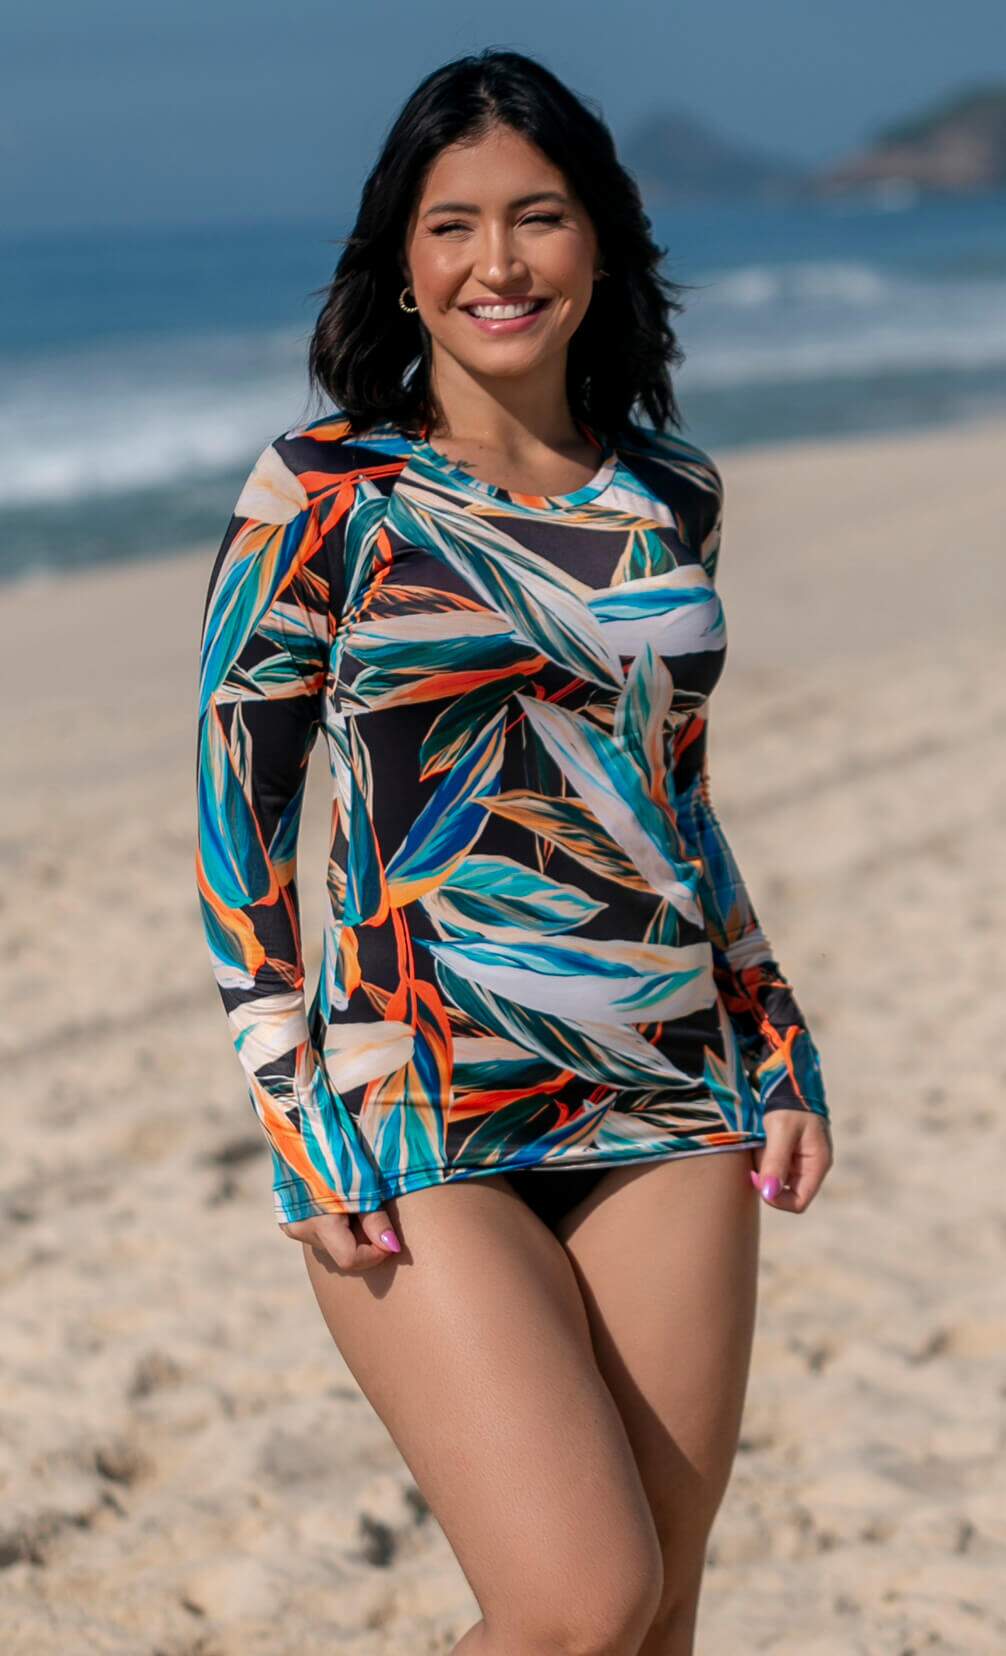 Comprar Camisa de Praia Feminina Estampada - a partir de R$49,90 - GRISFIT, Moda Praia